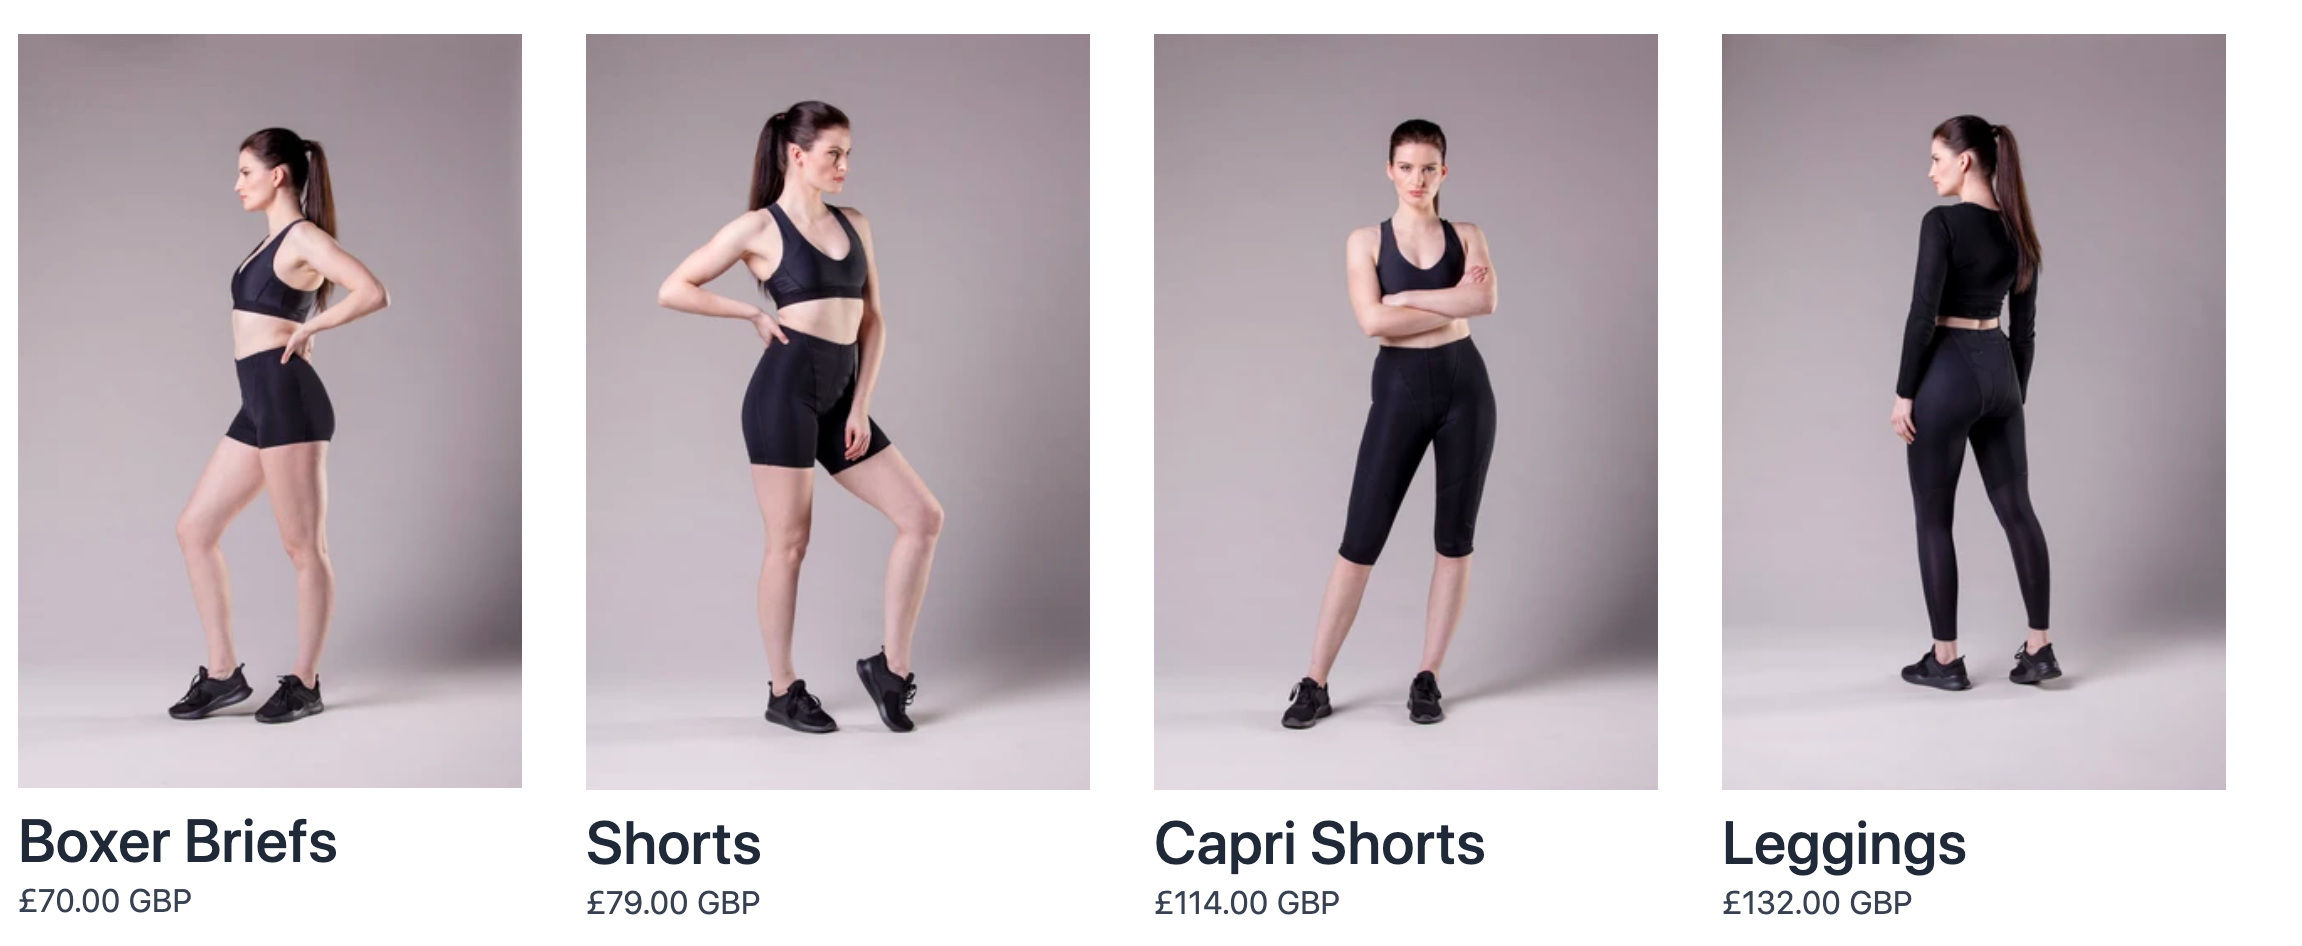 EVB sports shorts in 4 styles